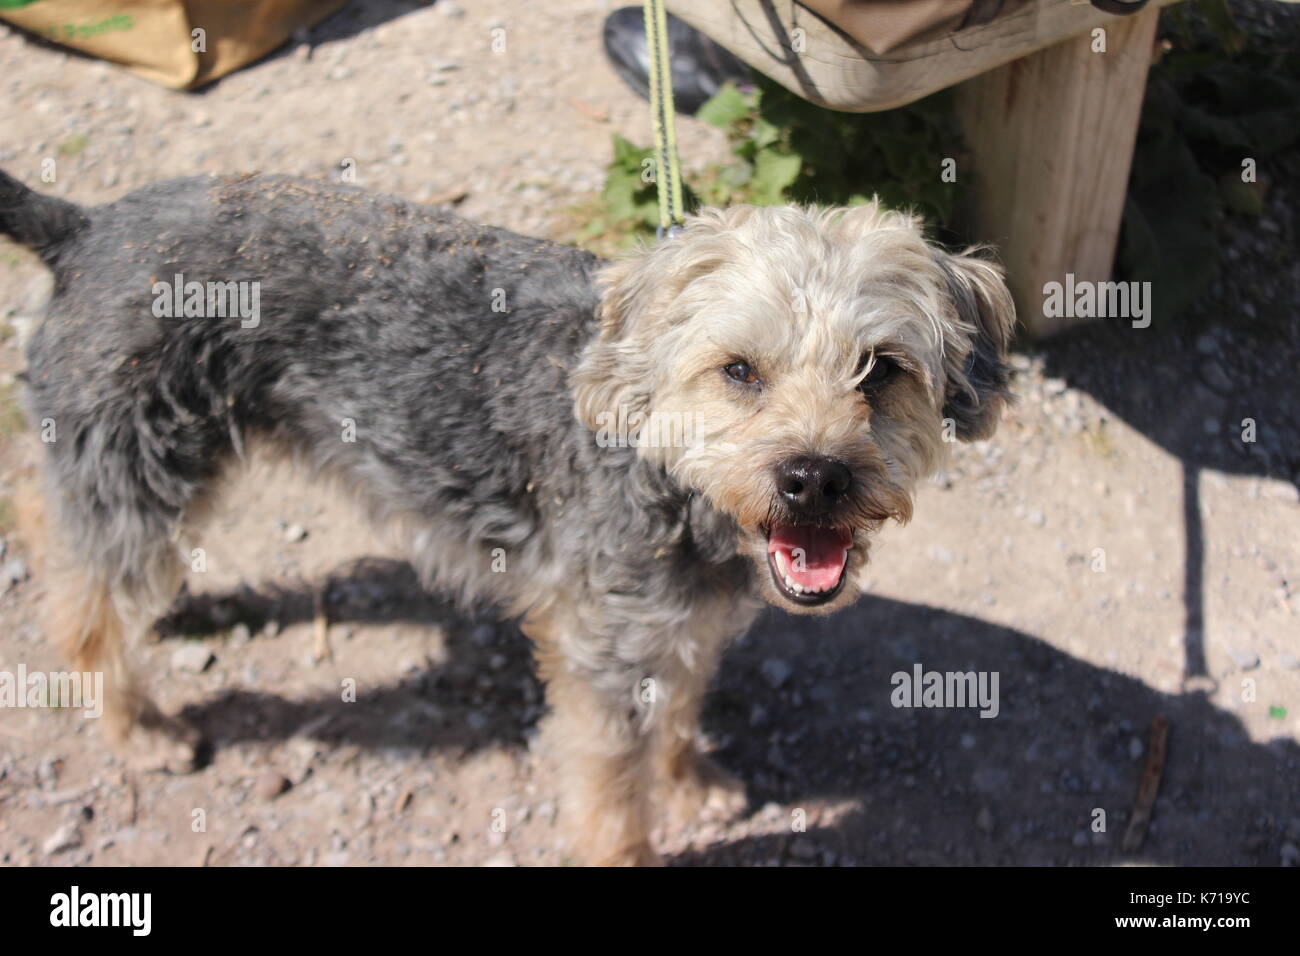 Border Terrier cross Poodle Stock Photo 